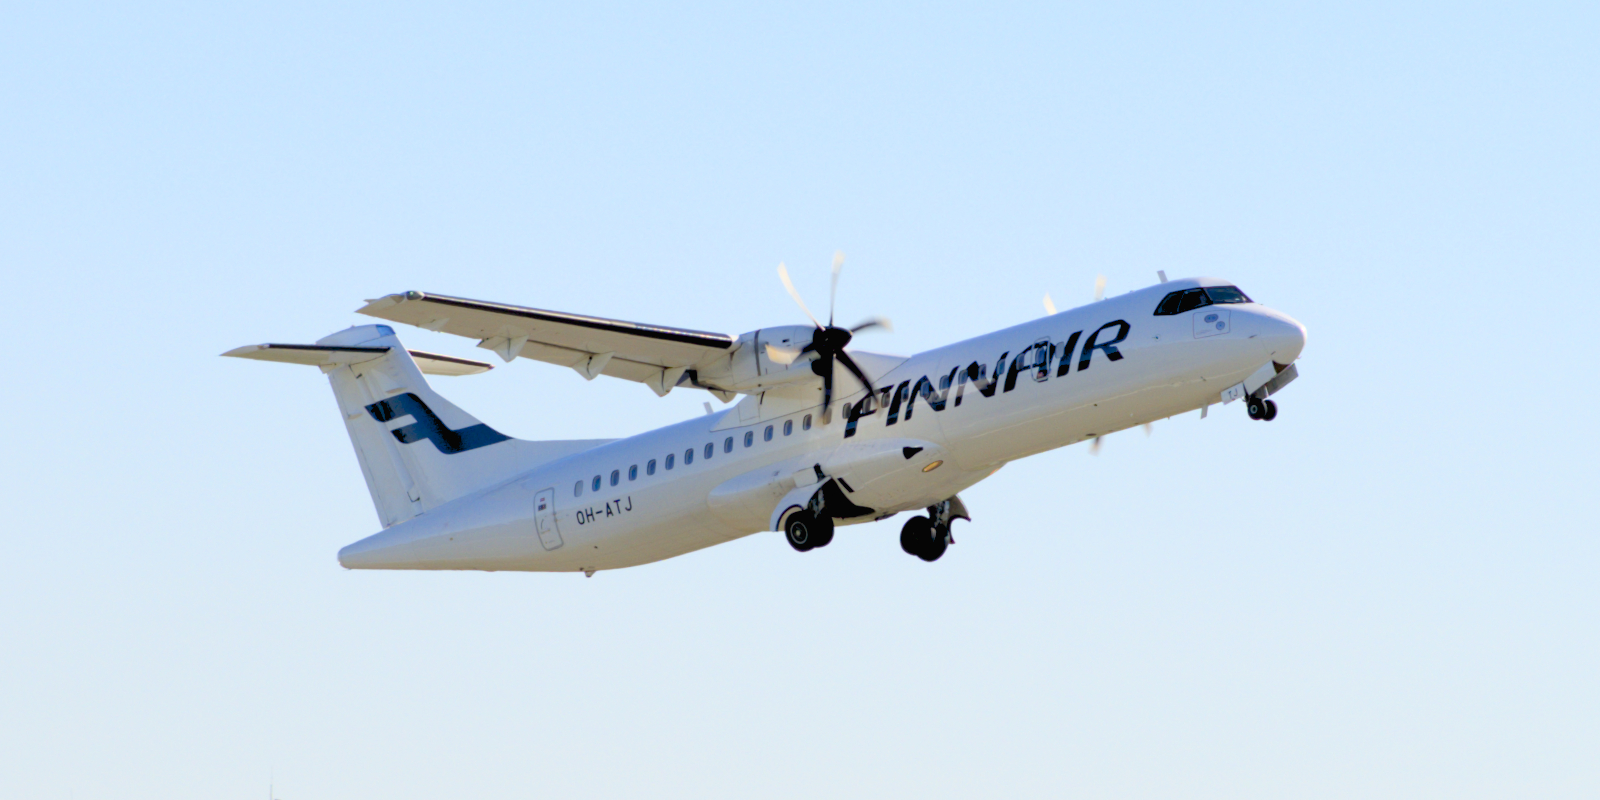 Finnair ATR 72-500